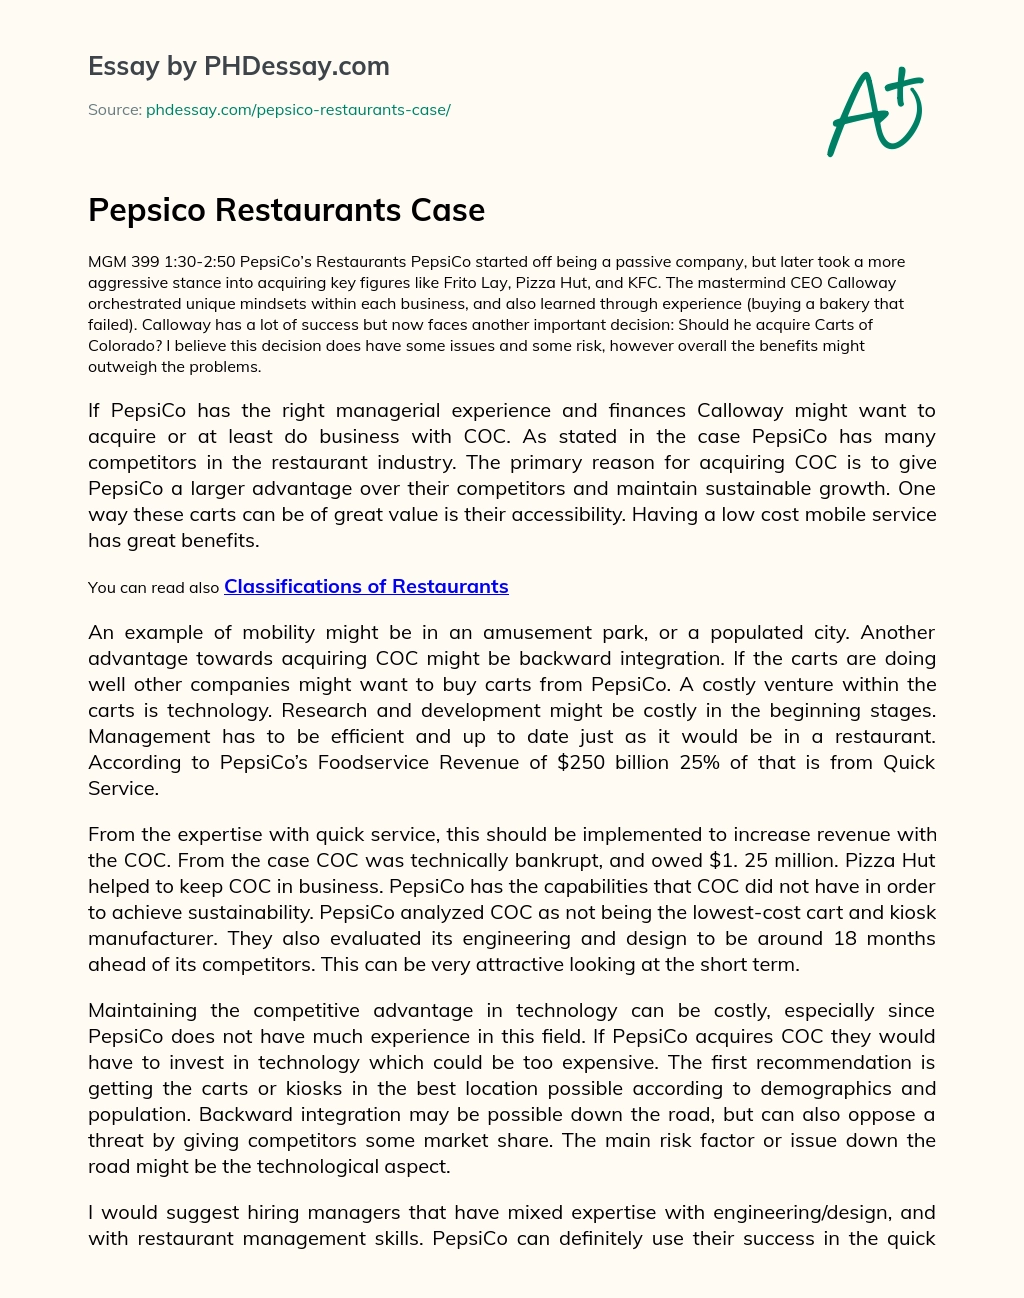 Pepsico Restaurants Case essay